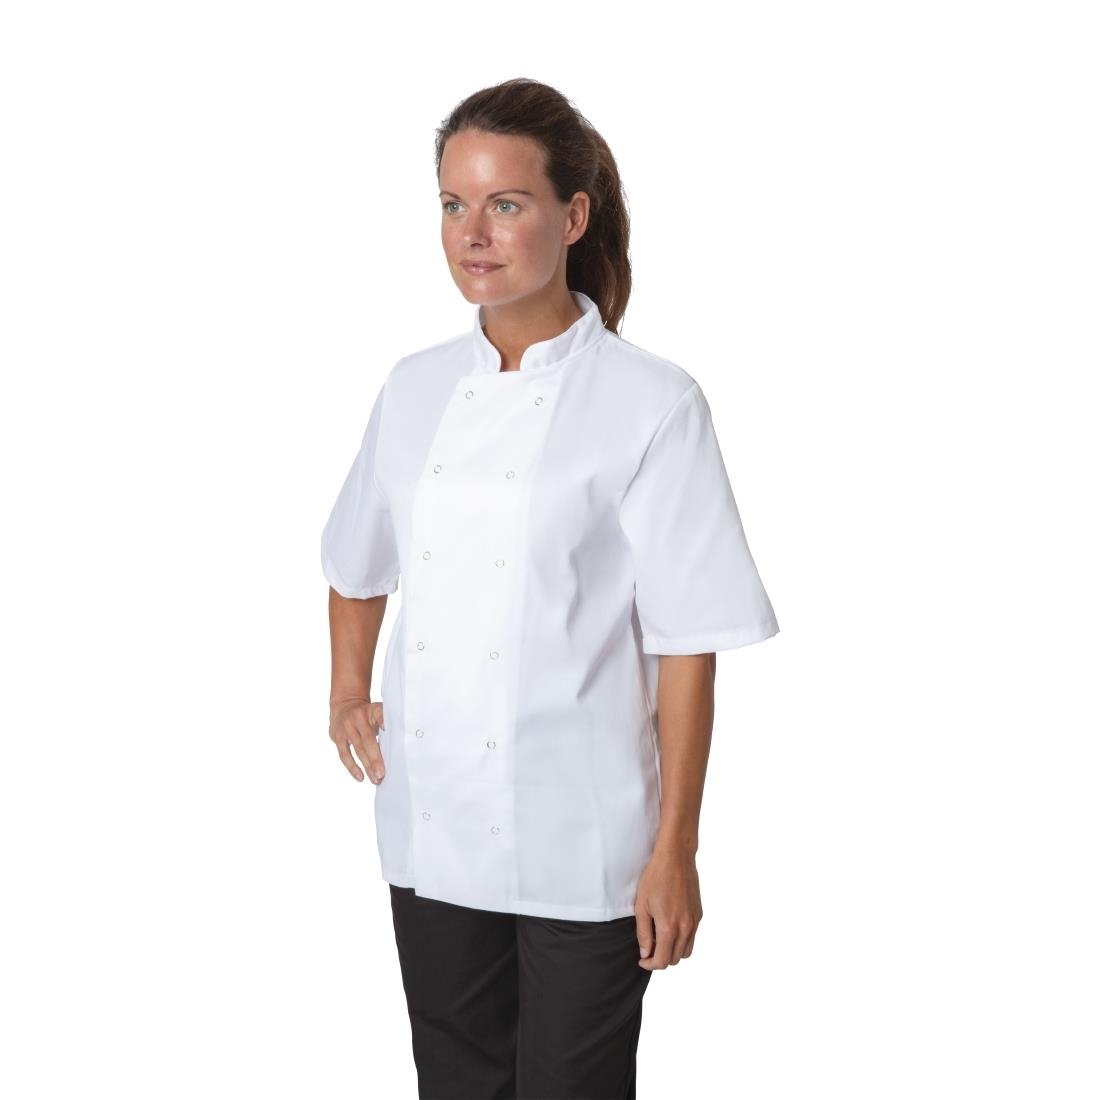 B250-XS Whites Boston Unisex Short Sleeve Chefs Jacket White XS JD Catering Equipment Solutions Ltd